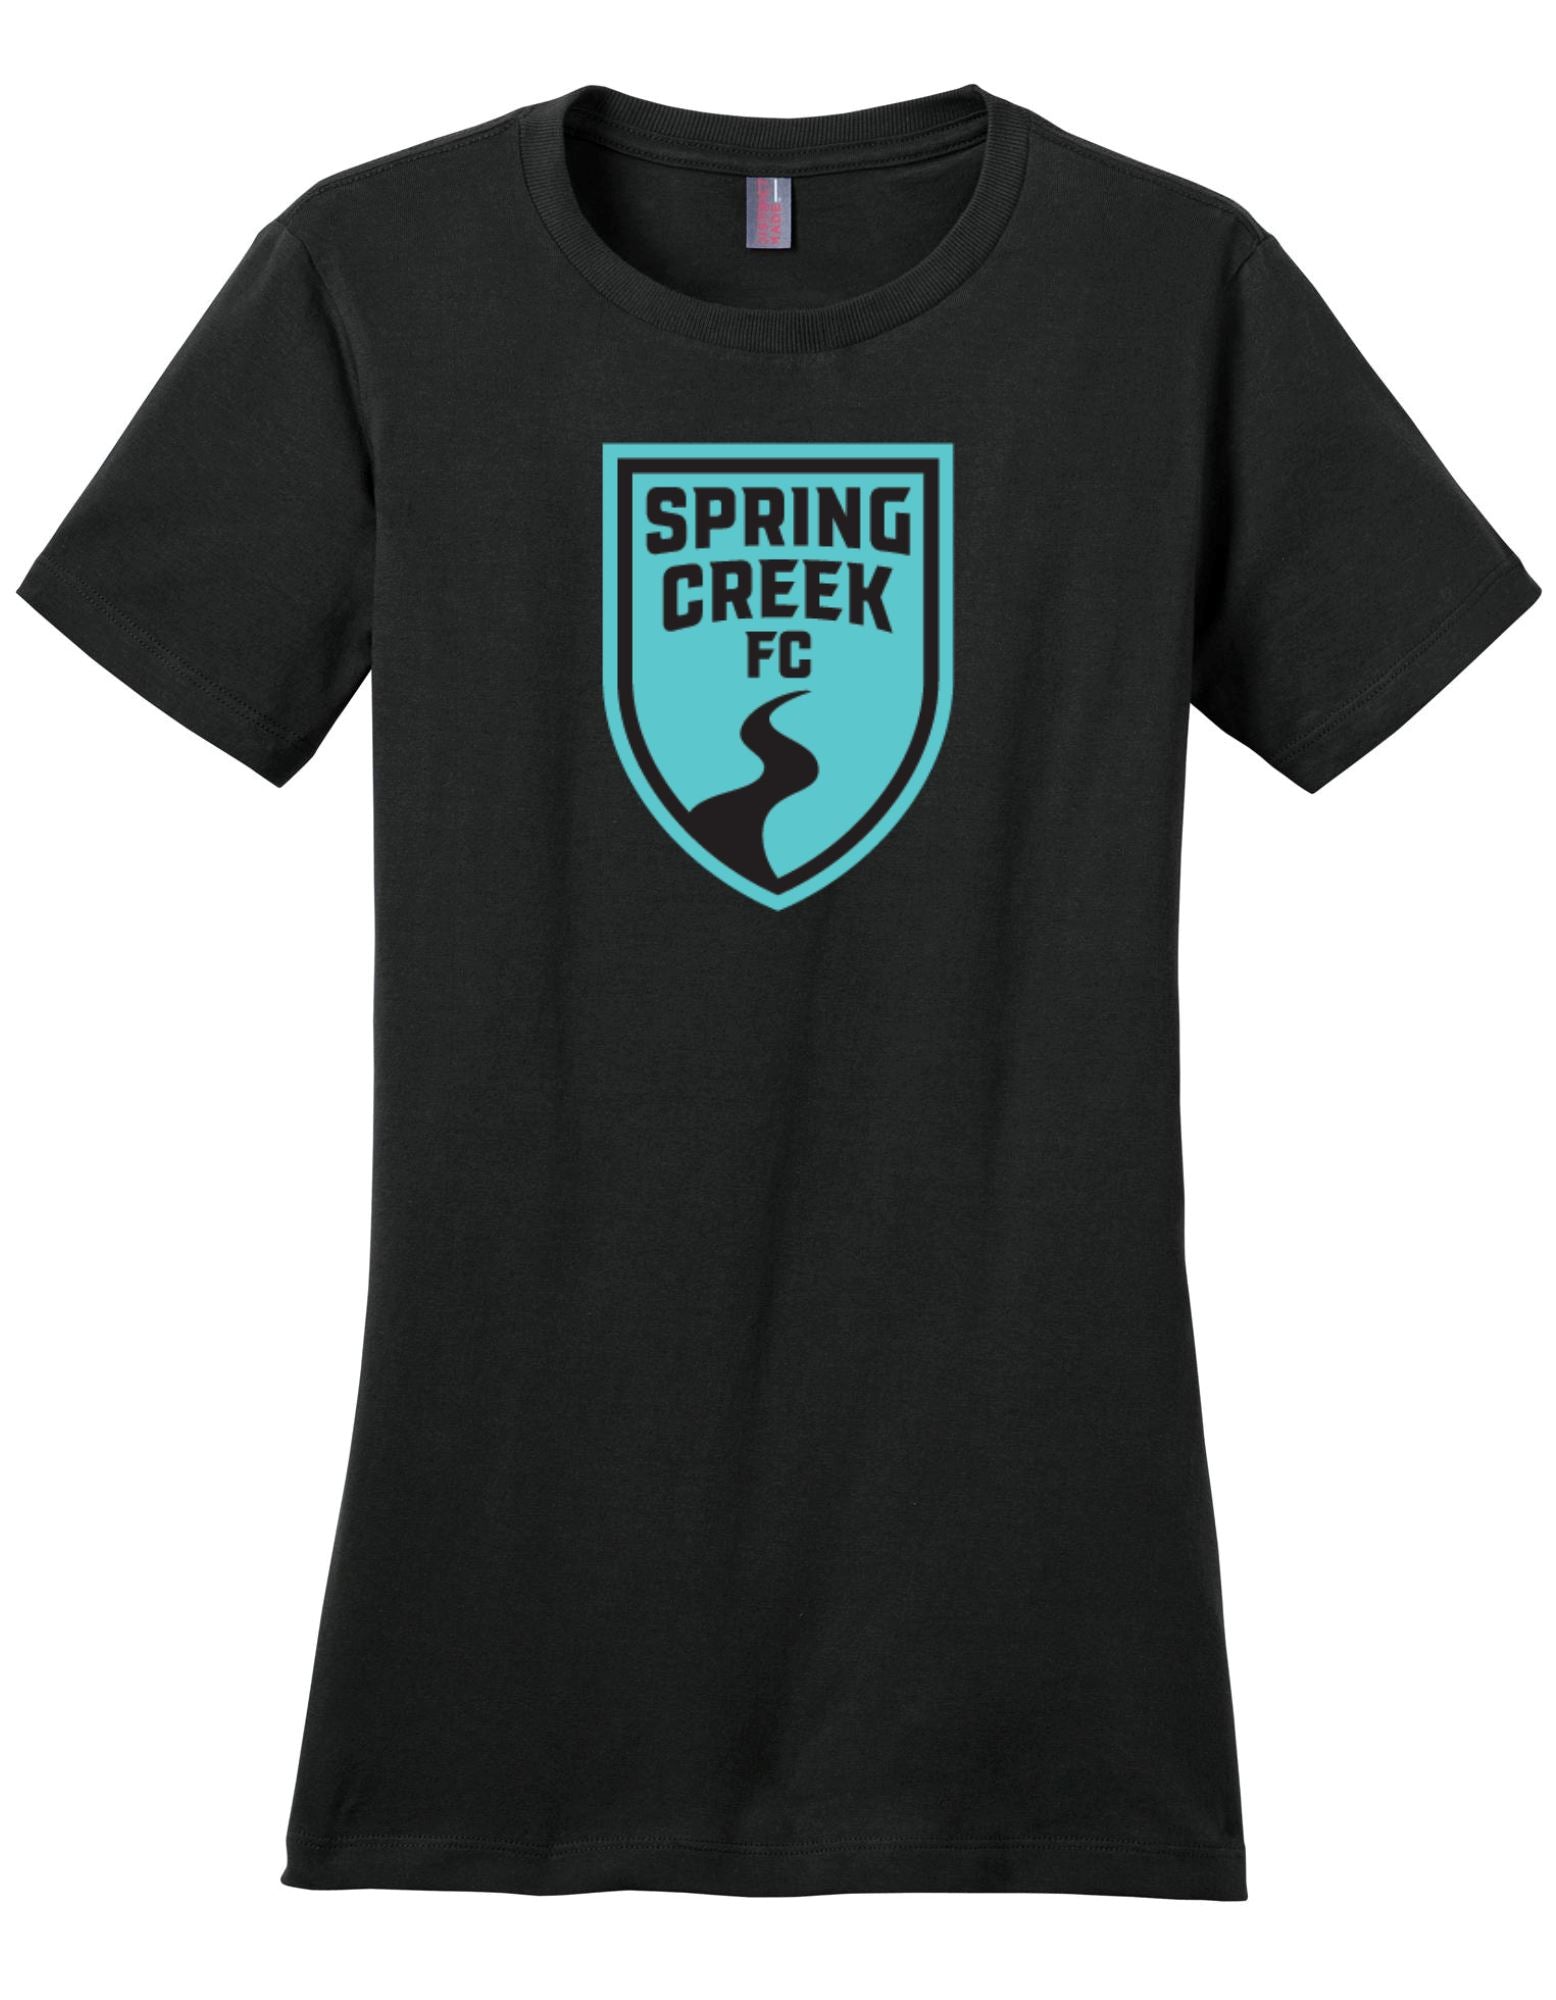 Spring Creek FC | Women's Short Sleeve t-shirt Goal Kick Soccer Black Women's Small 